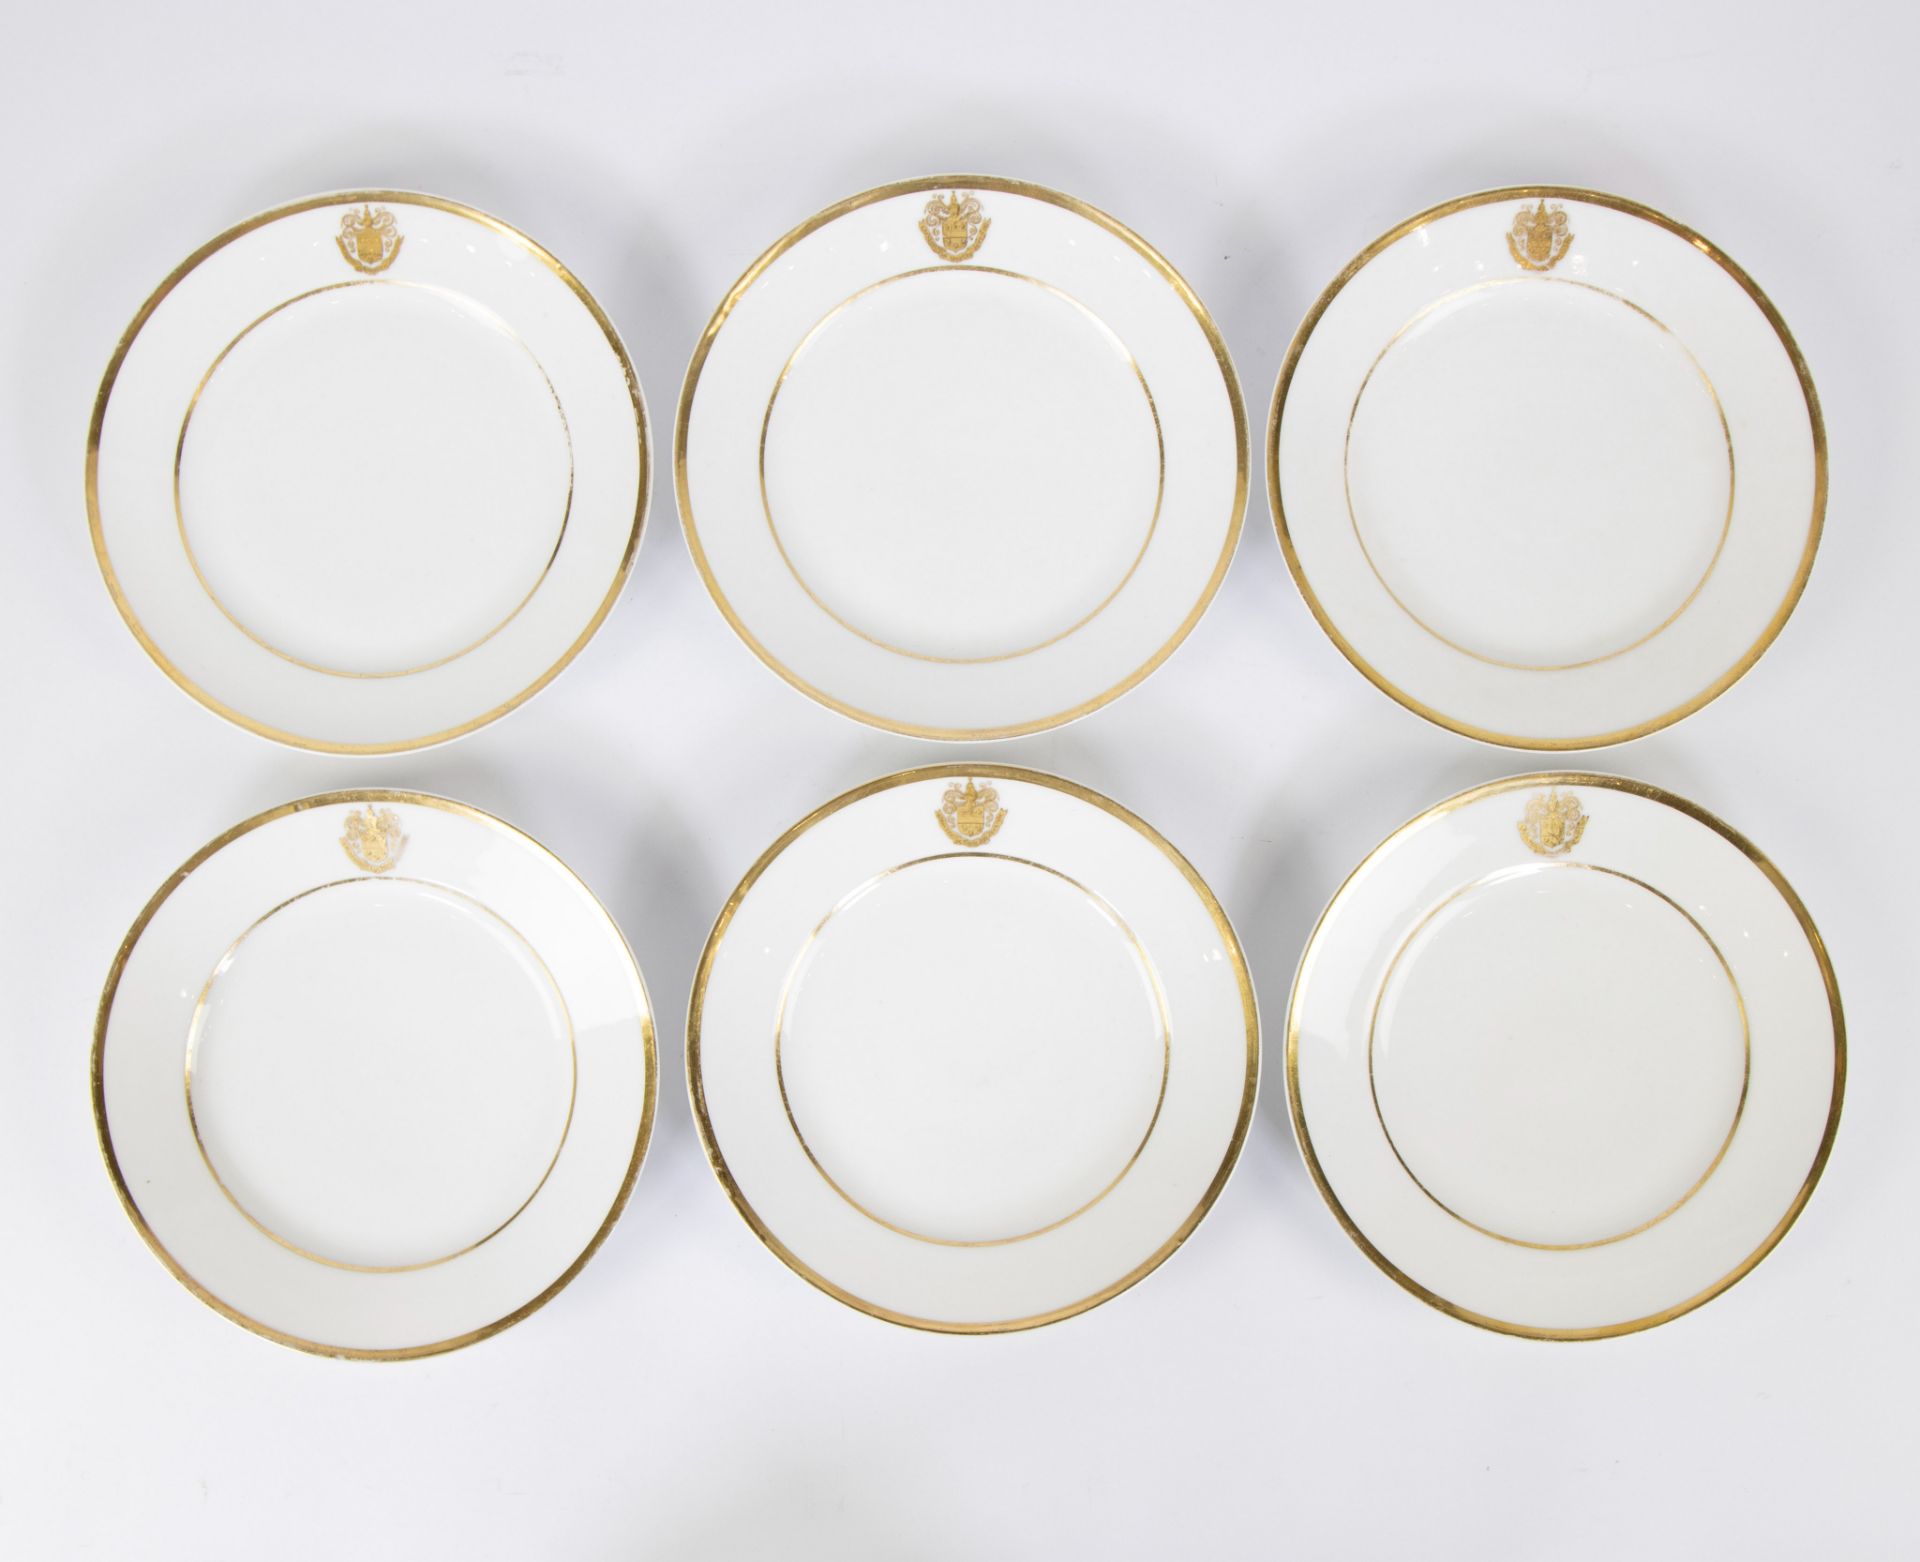 Collection of 6 Denuelle Paris porcelain plates circa 1820 (cresite in virtute jucunde)